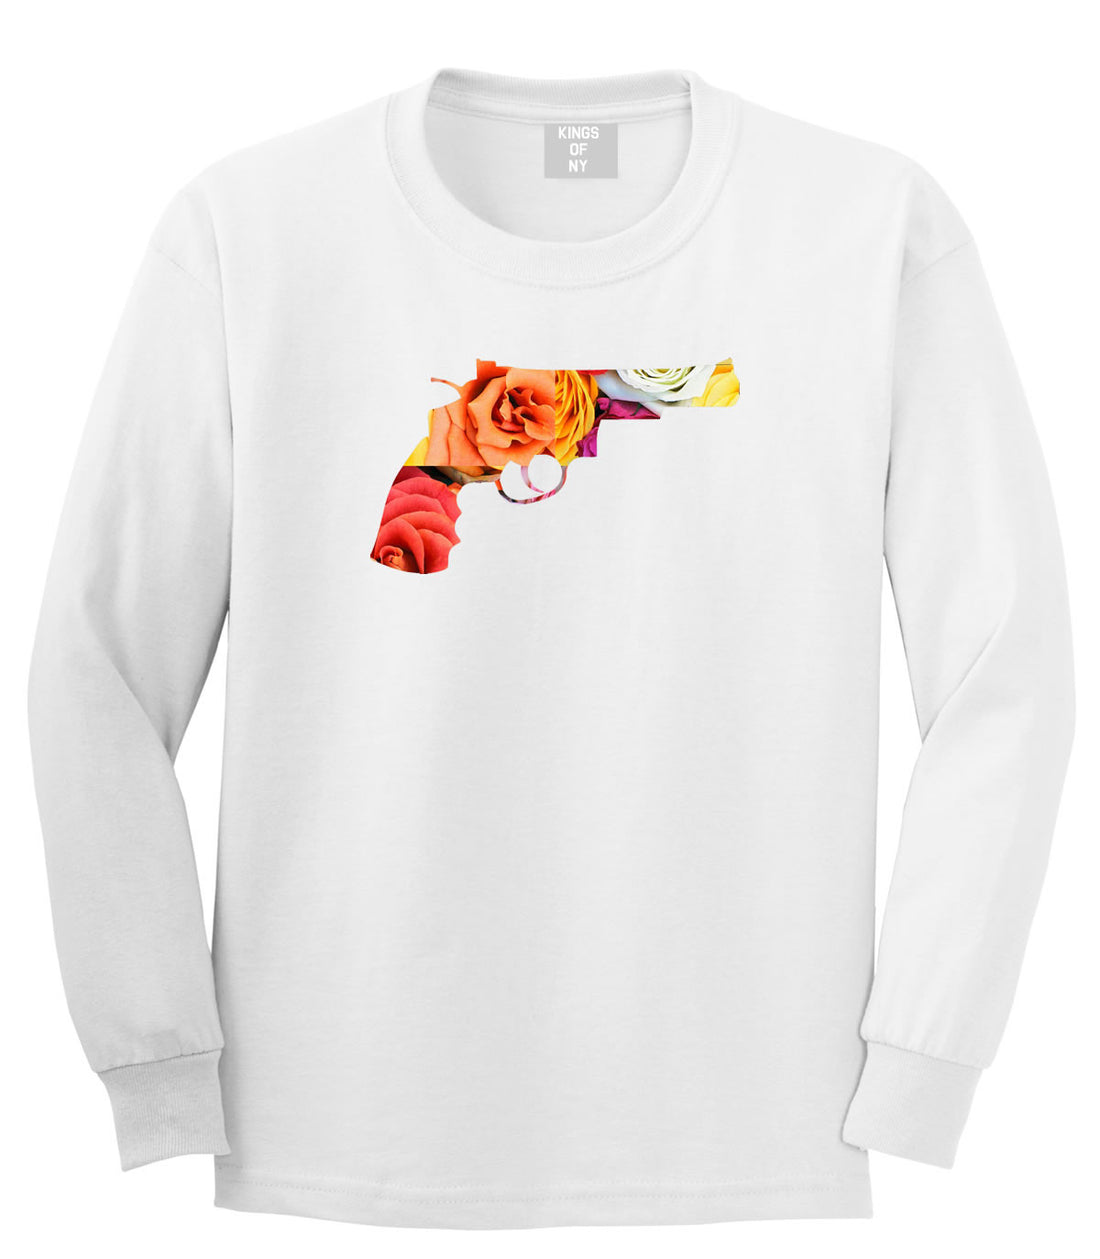 Floral Gun Flower Print Colt 45 Revolver Long Sleeve Boys Kids T-Shirt in White by Kings Of NY